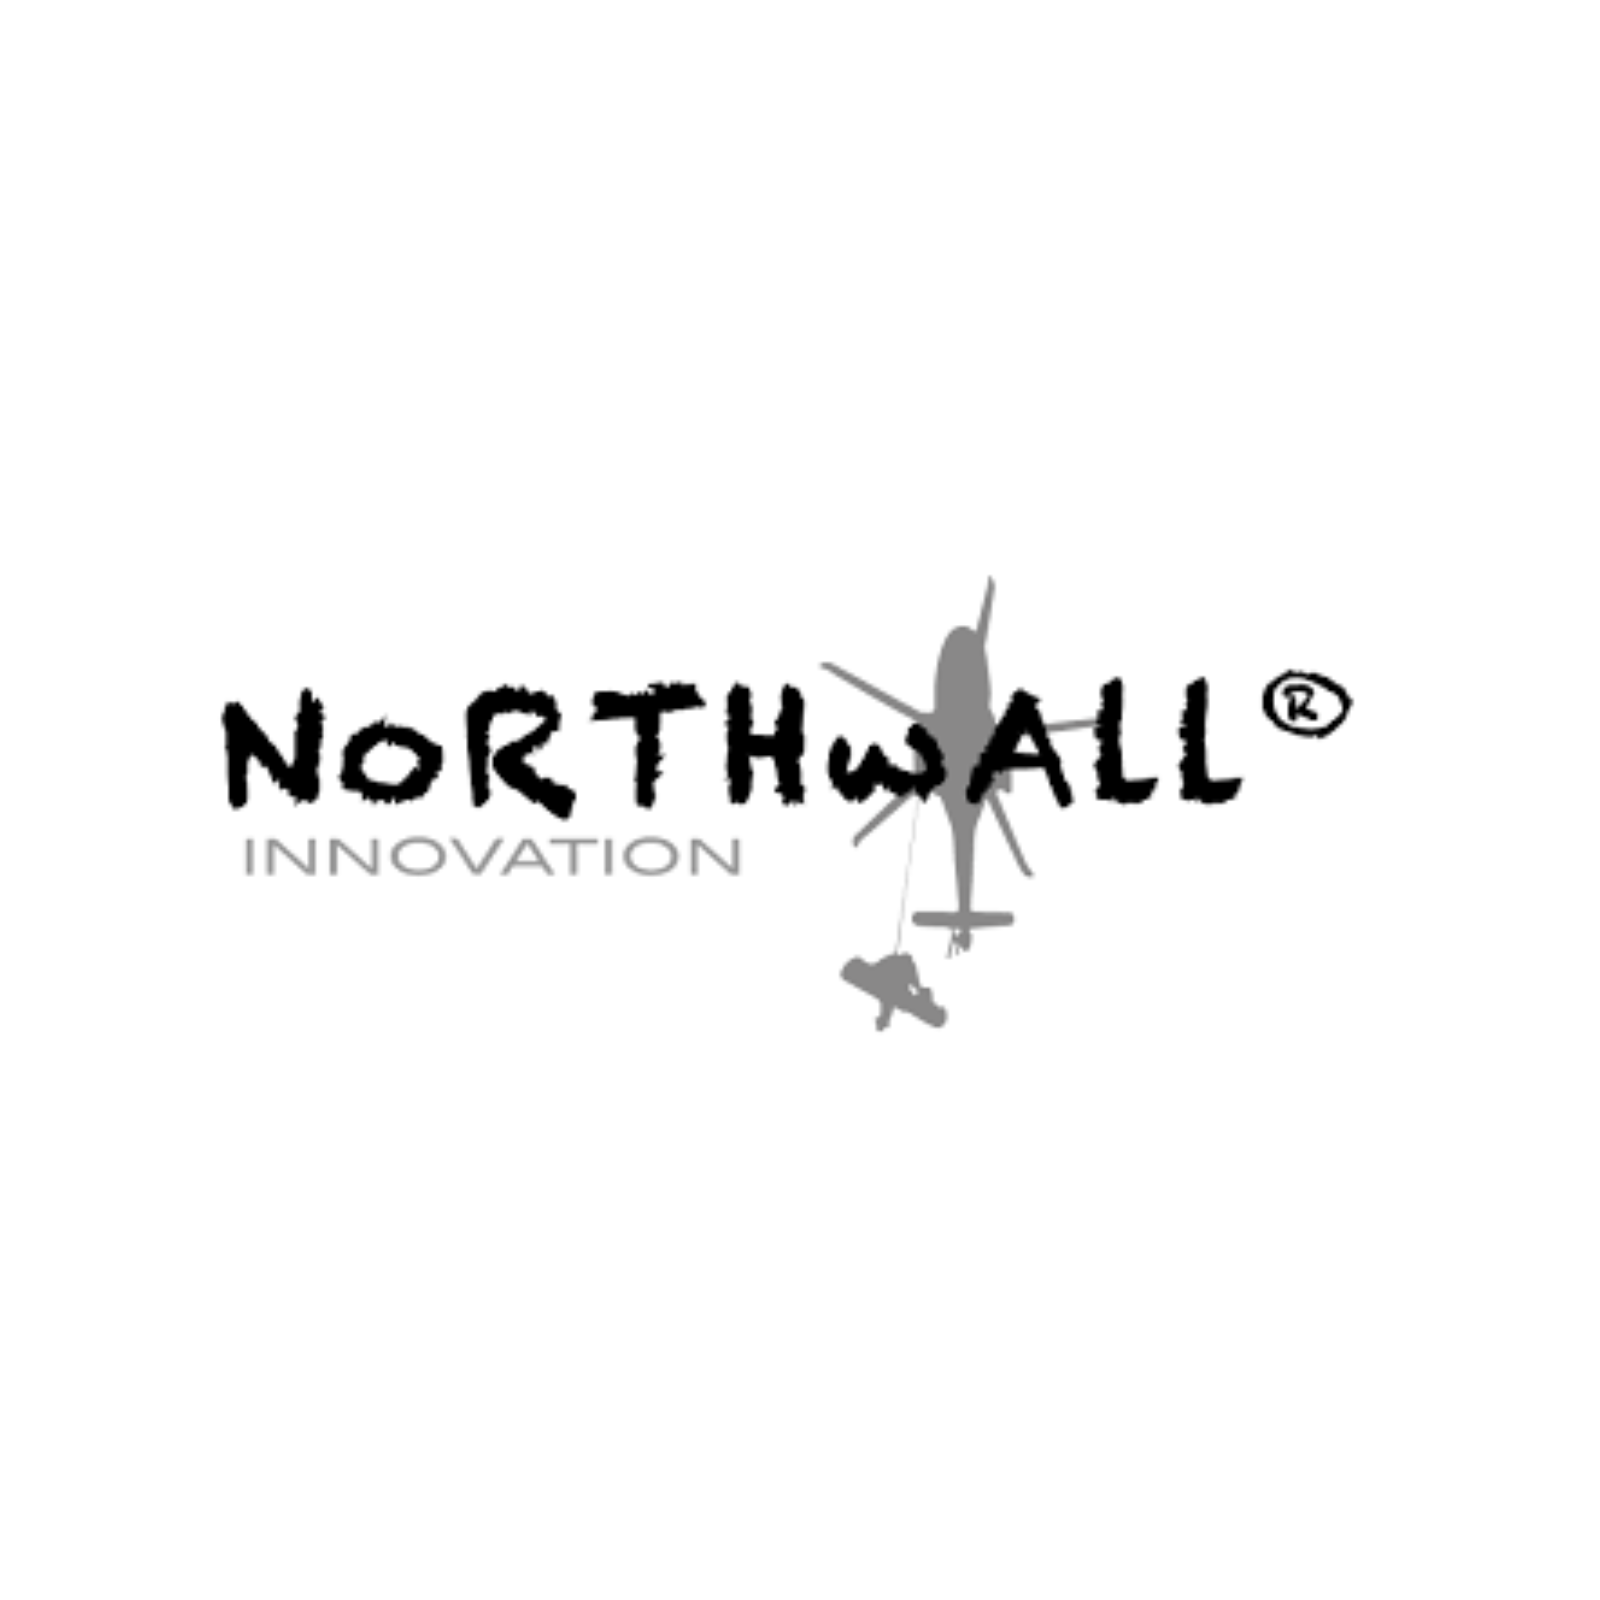 Northwall